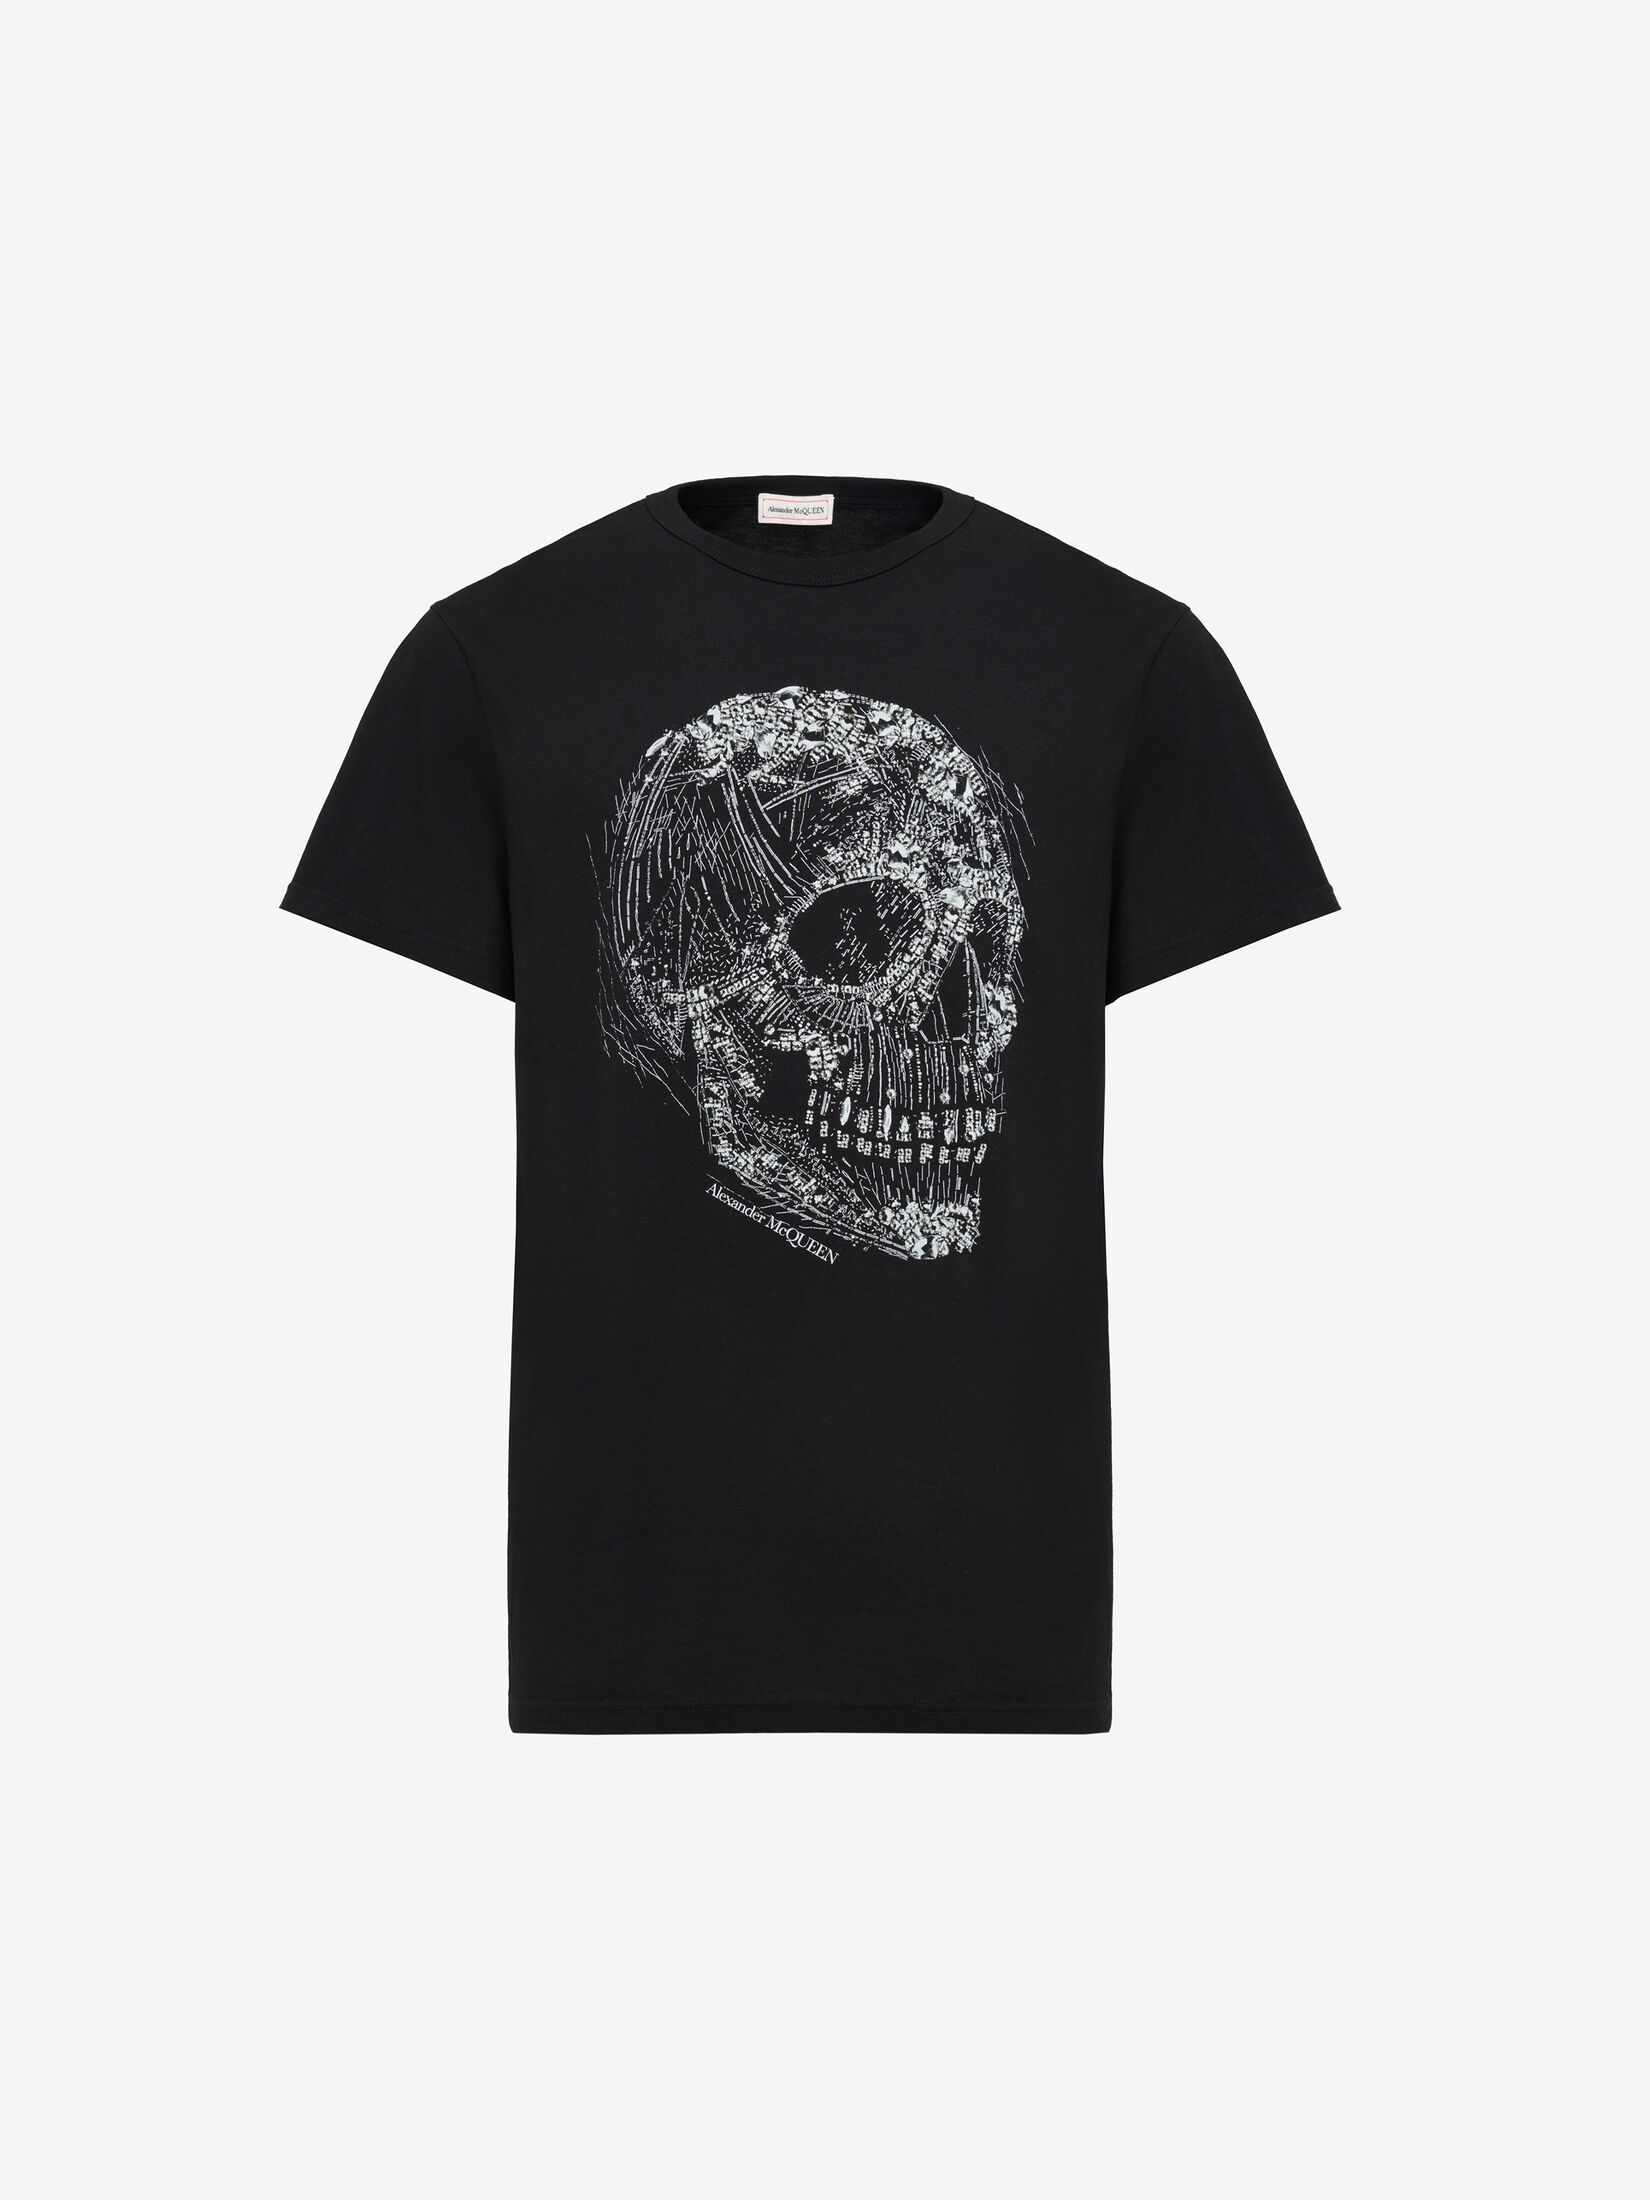 Crystal Skull T-shirt in Black/White | Alexander McQueen US